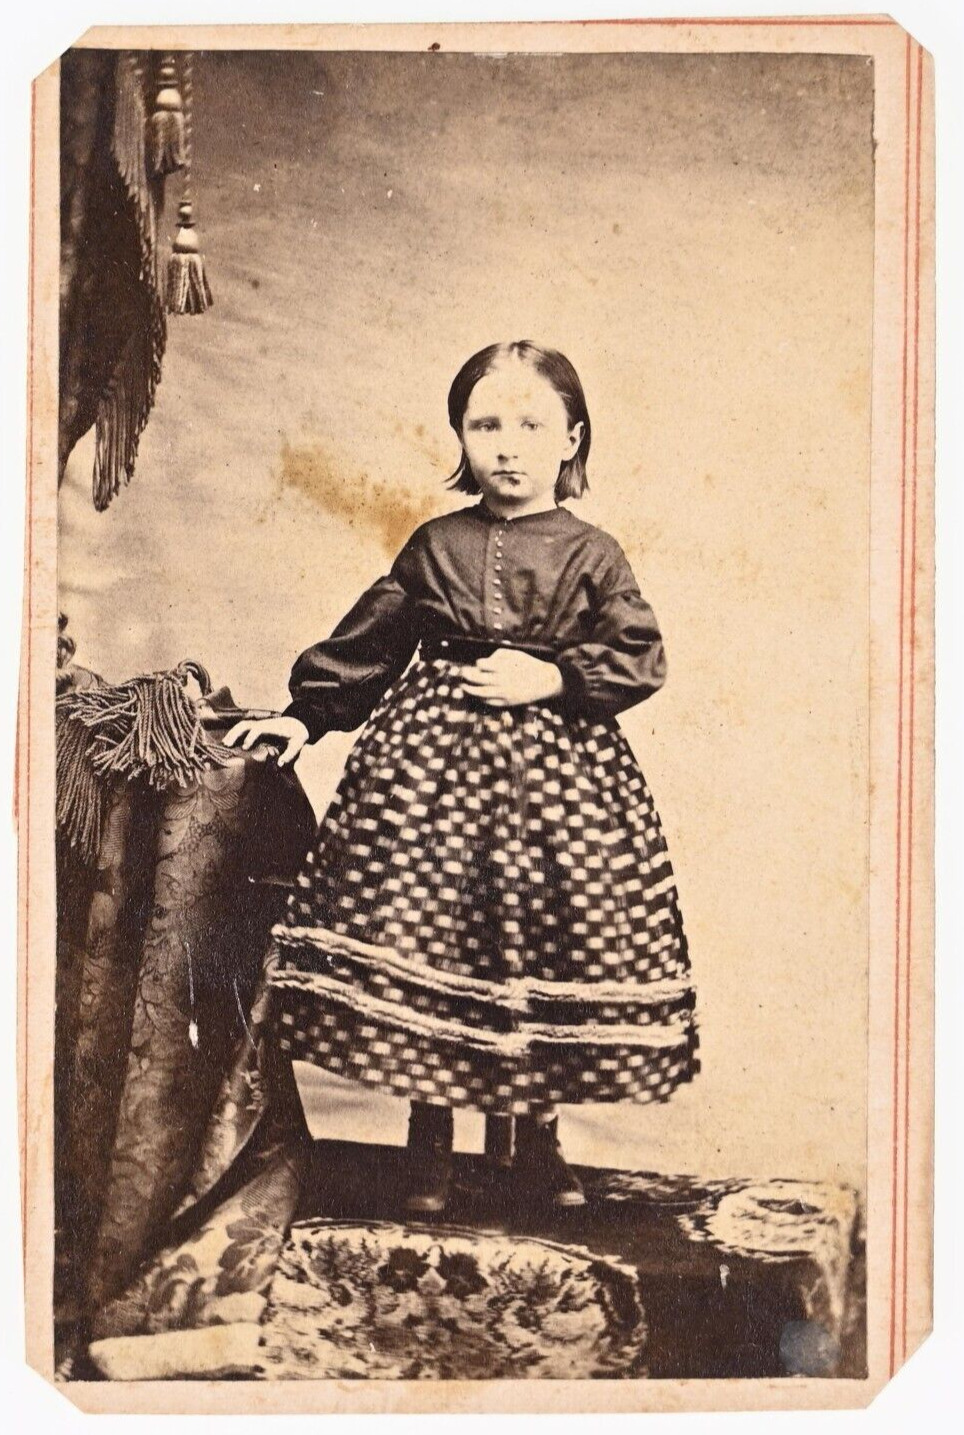 ANTIQUE CDV CIRCA 1860s CUTE LITTLE GIRL IN DRESS J.G. VALLADE ALTOONA PENN.